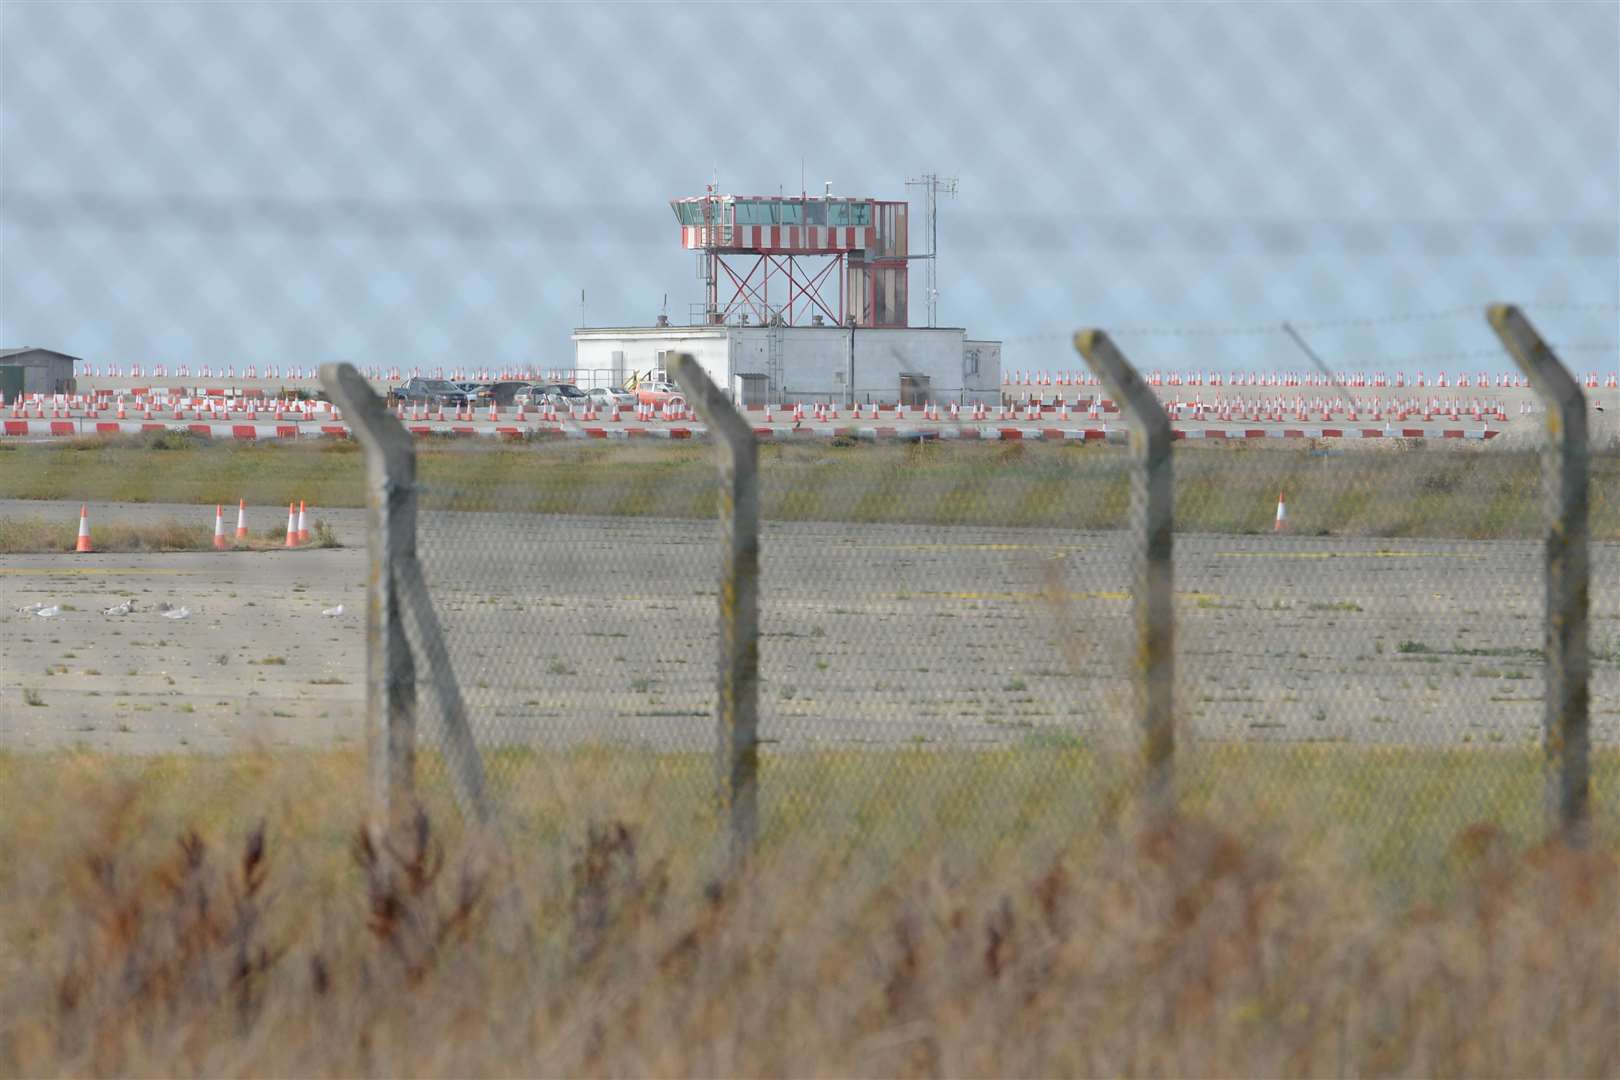 Manston Airport has stood unused since it shut in 2014